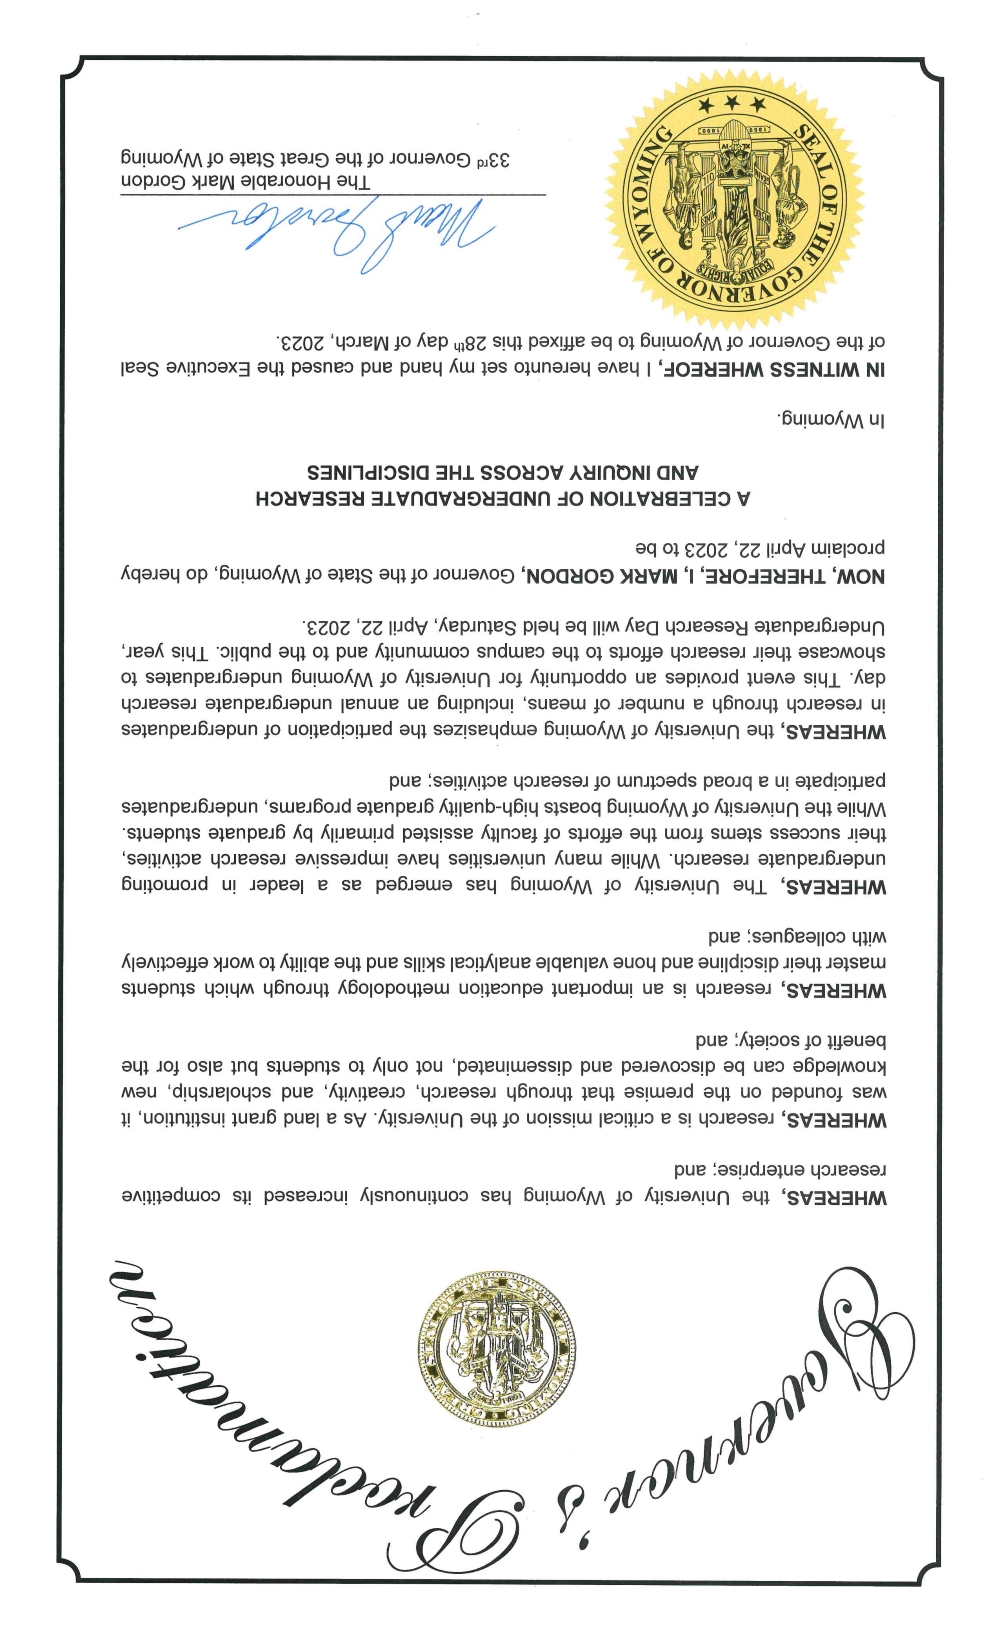 Governor's proclamation regarding undergraduate research day